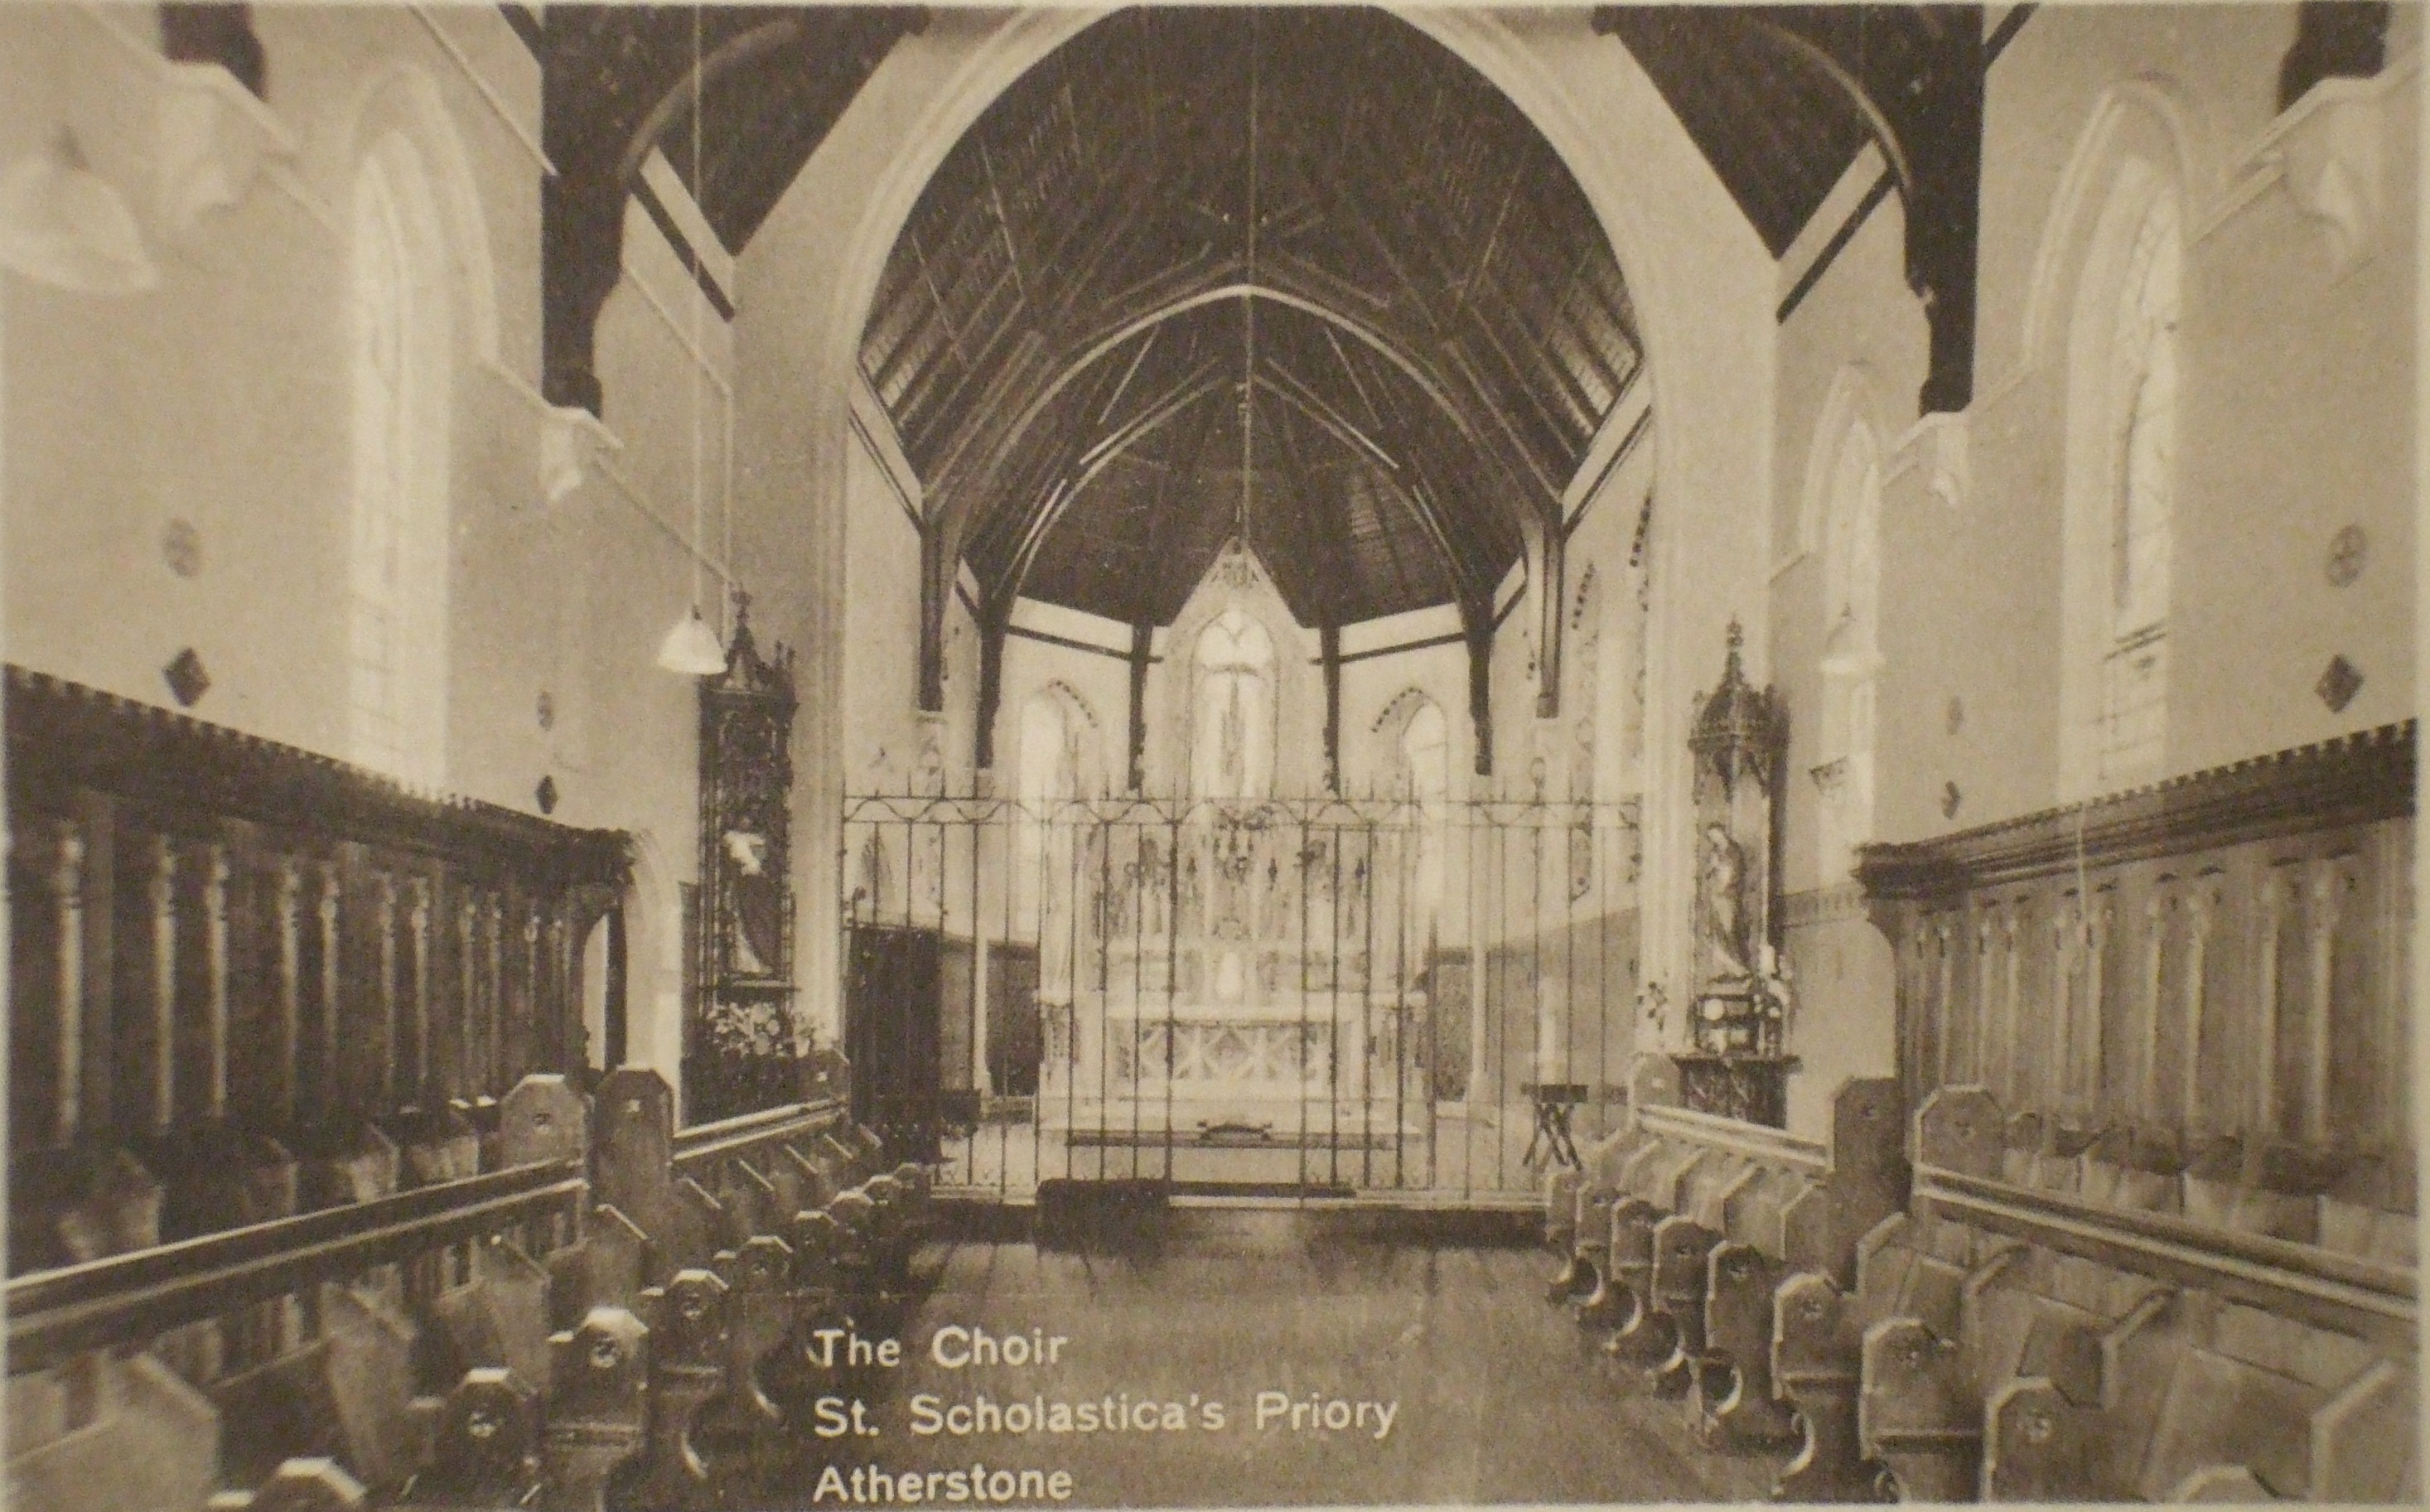 St. Scholastica Priory